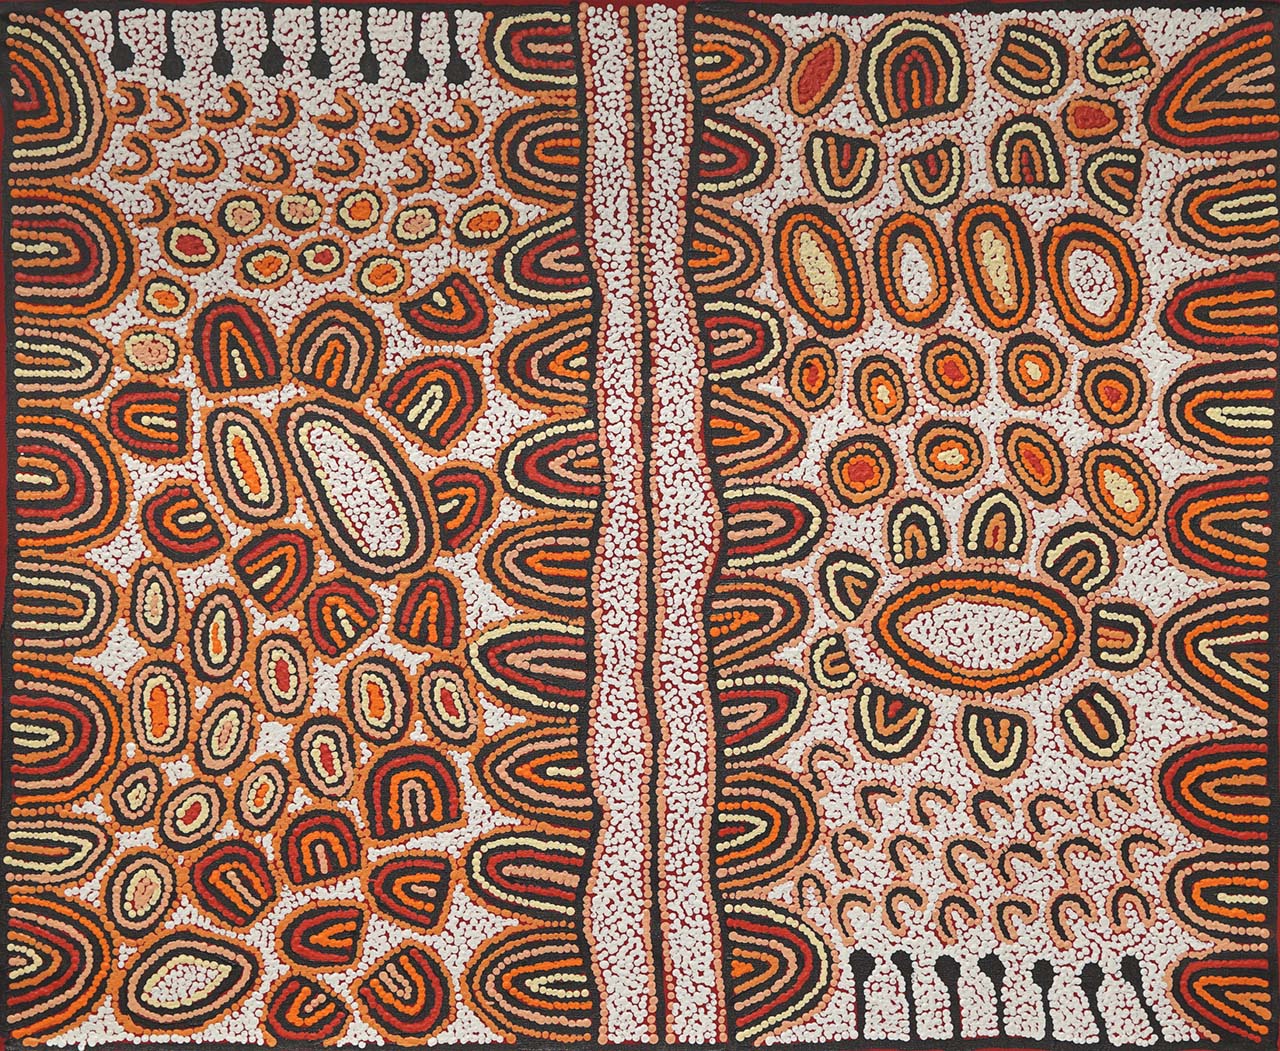 Aboriginal Dot Art Paintings From Australia Buy Online At Japingka